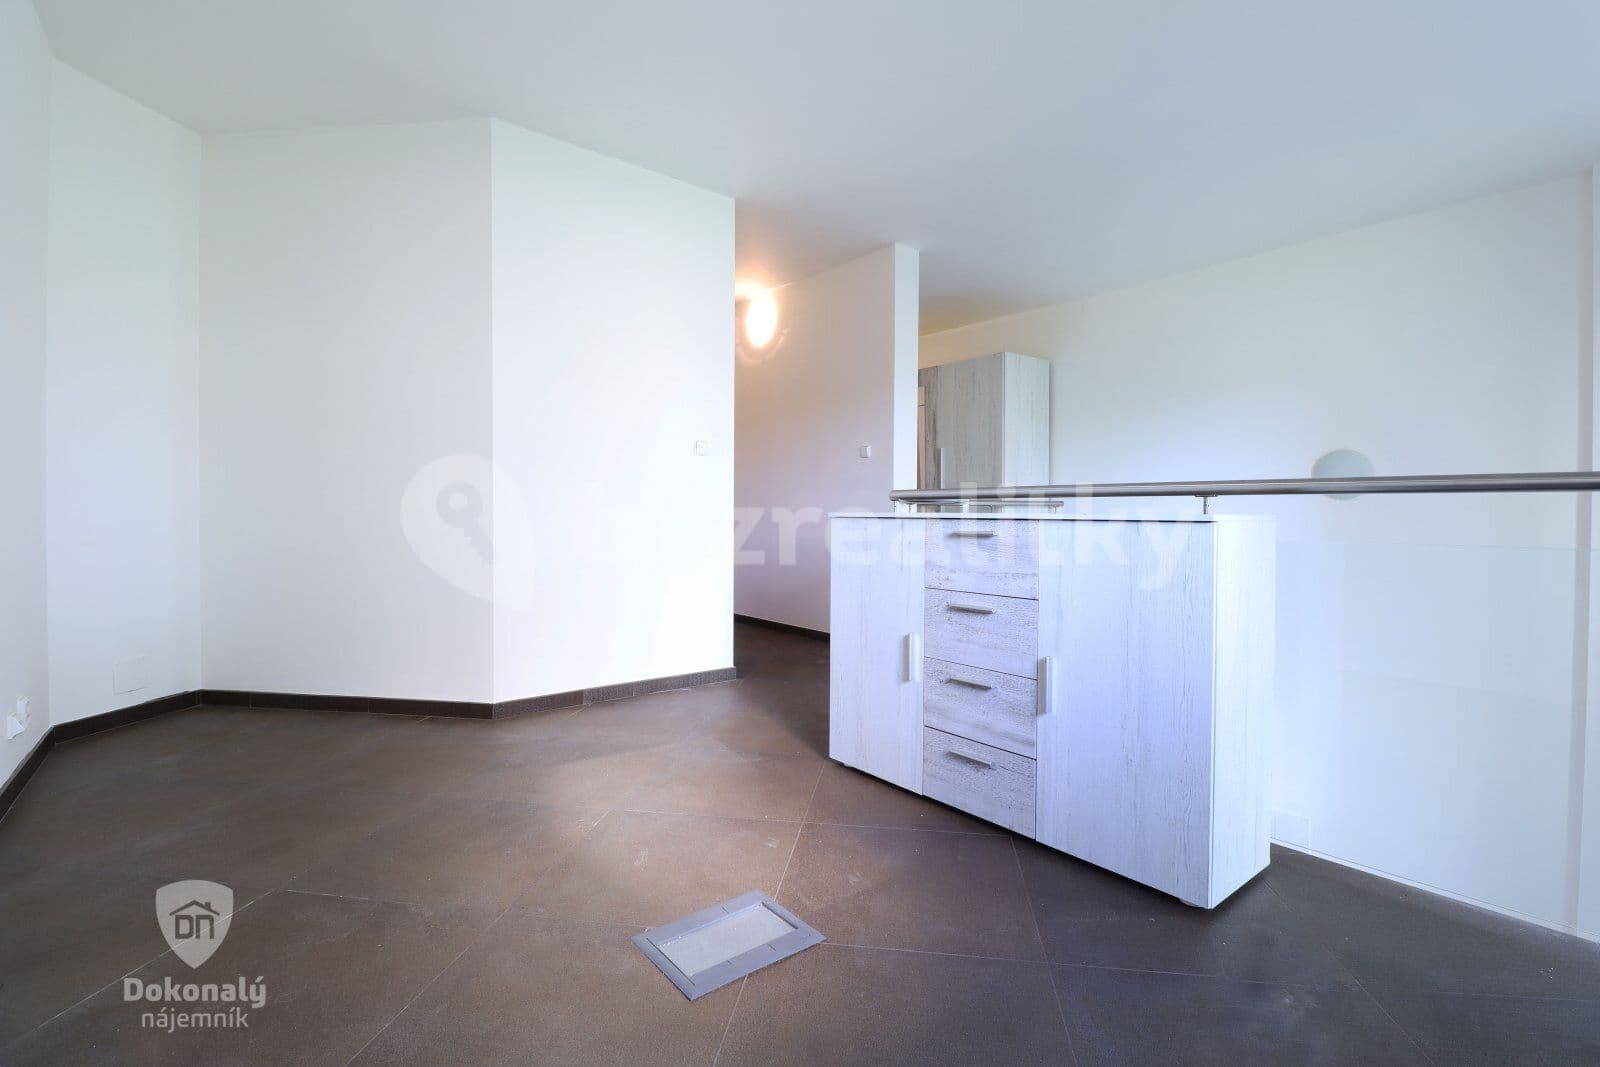 1 bedroom with open-plan kitchen flat to rent, 66 m², Česákova, Prague, Prague